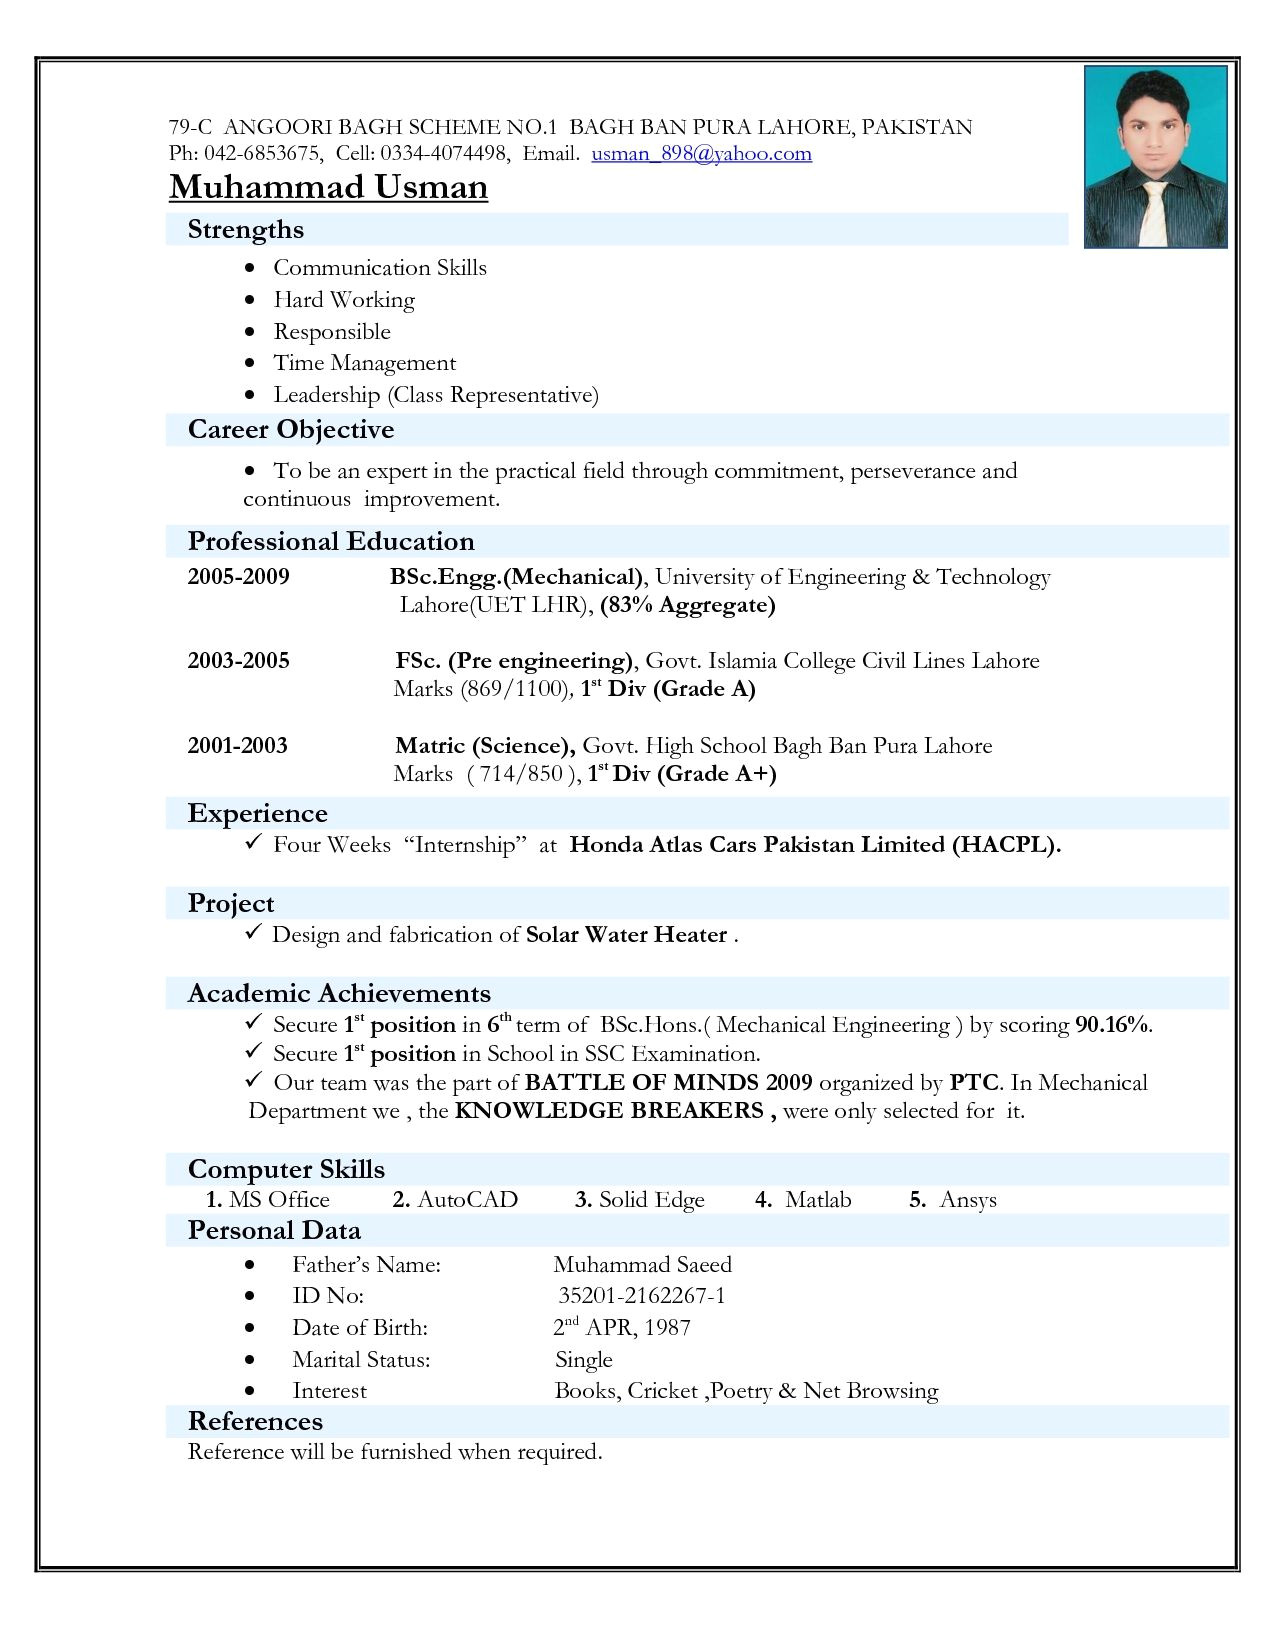 Resume format for Freshers Diploma Mechanical Engineers  williamsonga.us